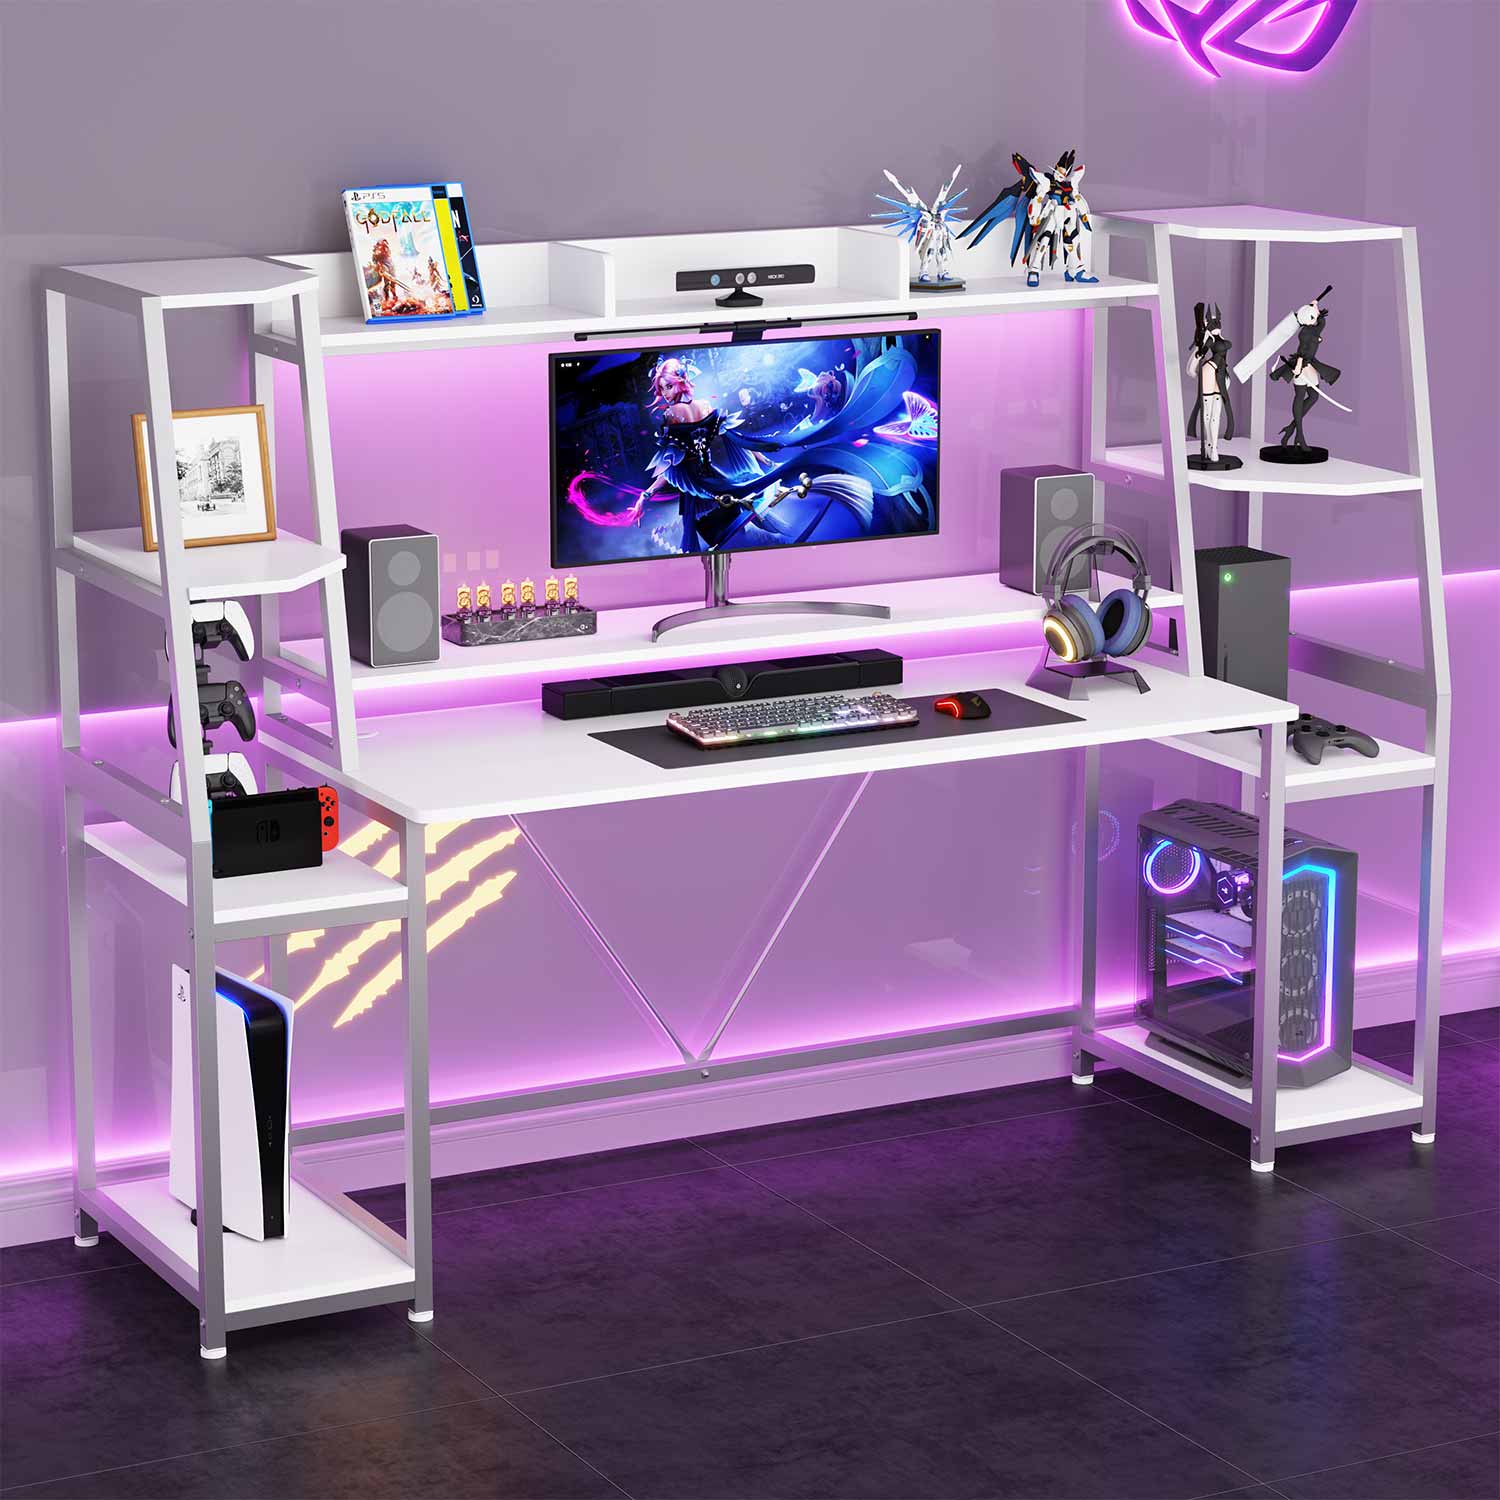 Sikaic 78.8 Inches Large PC Gamer LED Gaming Desk White